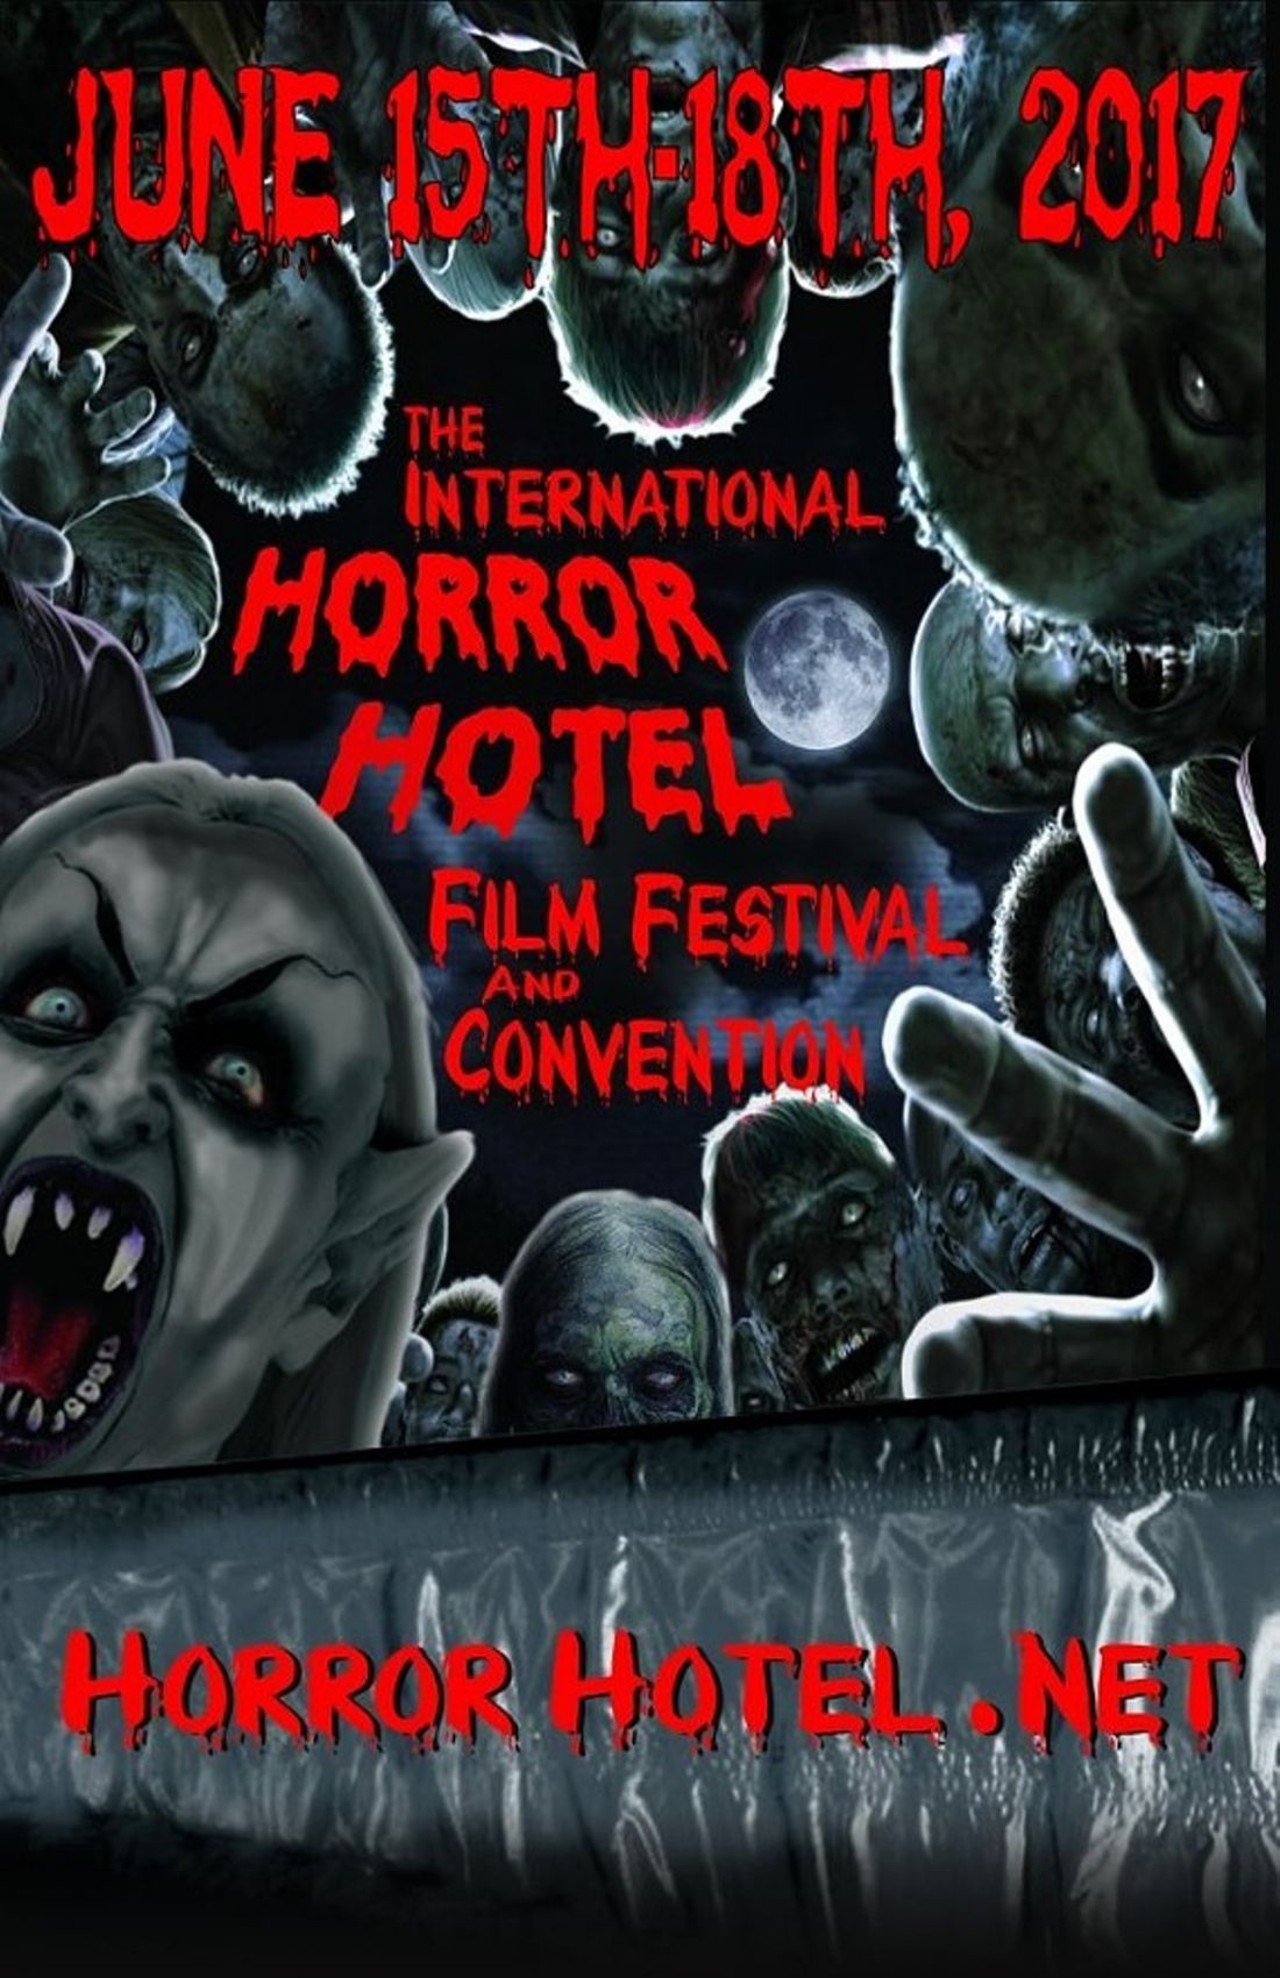  Horror Hotel: Film Fest & Convention
Thu, June 15-Sun, June 18
Provided Artwork